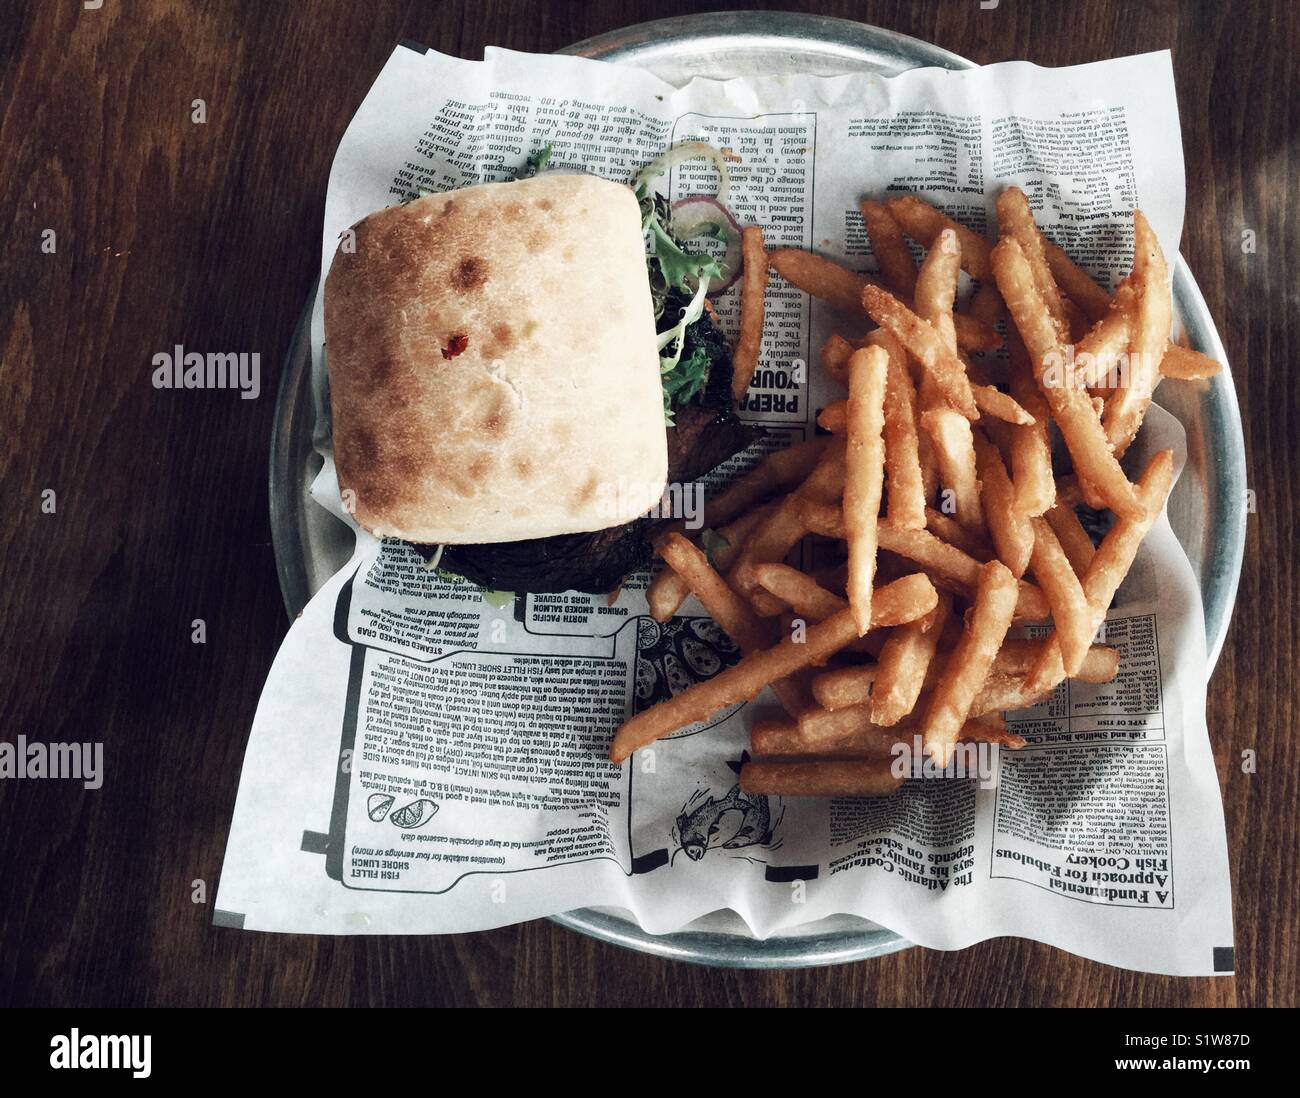 Portobello mushroom burger and fries on newspaper Stock Photo